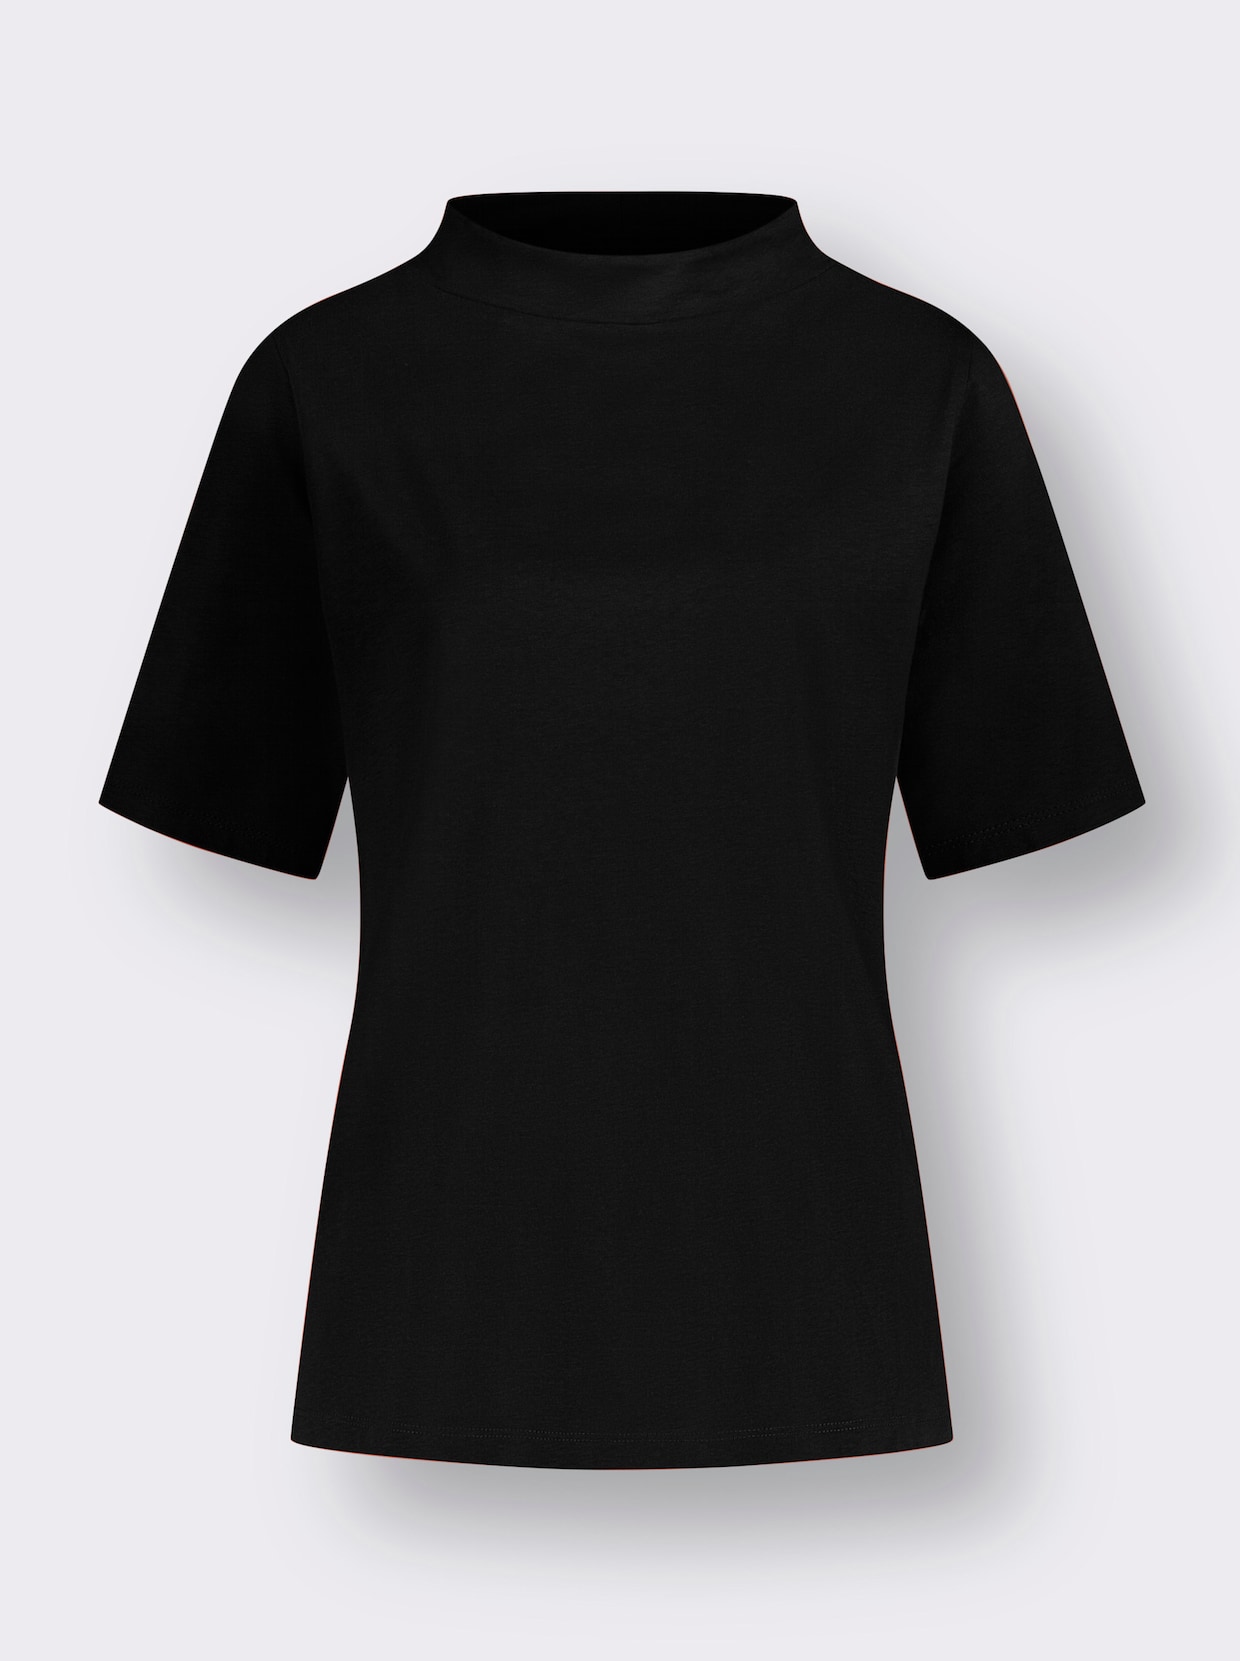 Tričko s krátkým rukávem - černá